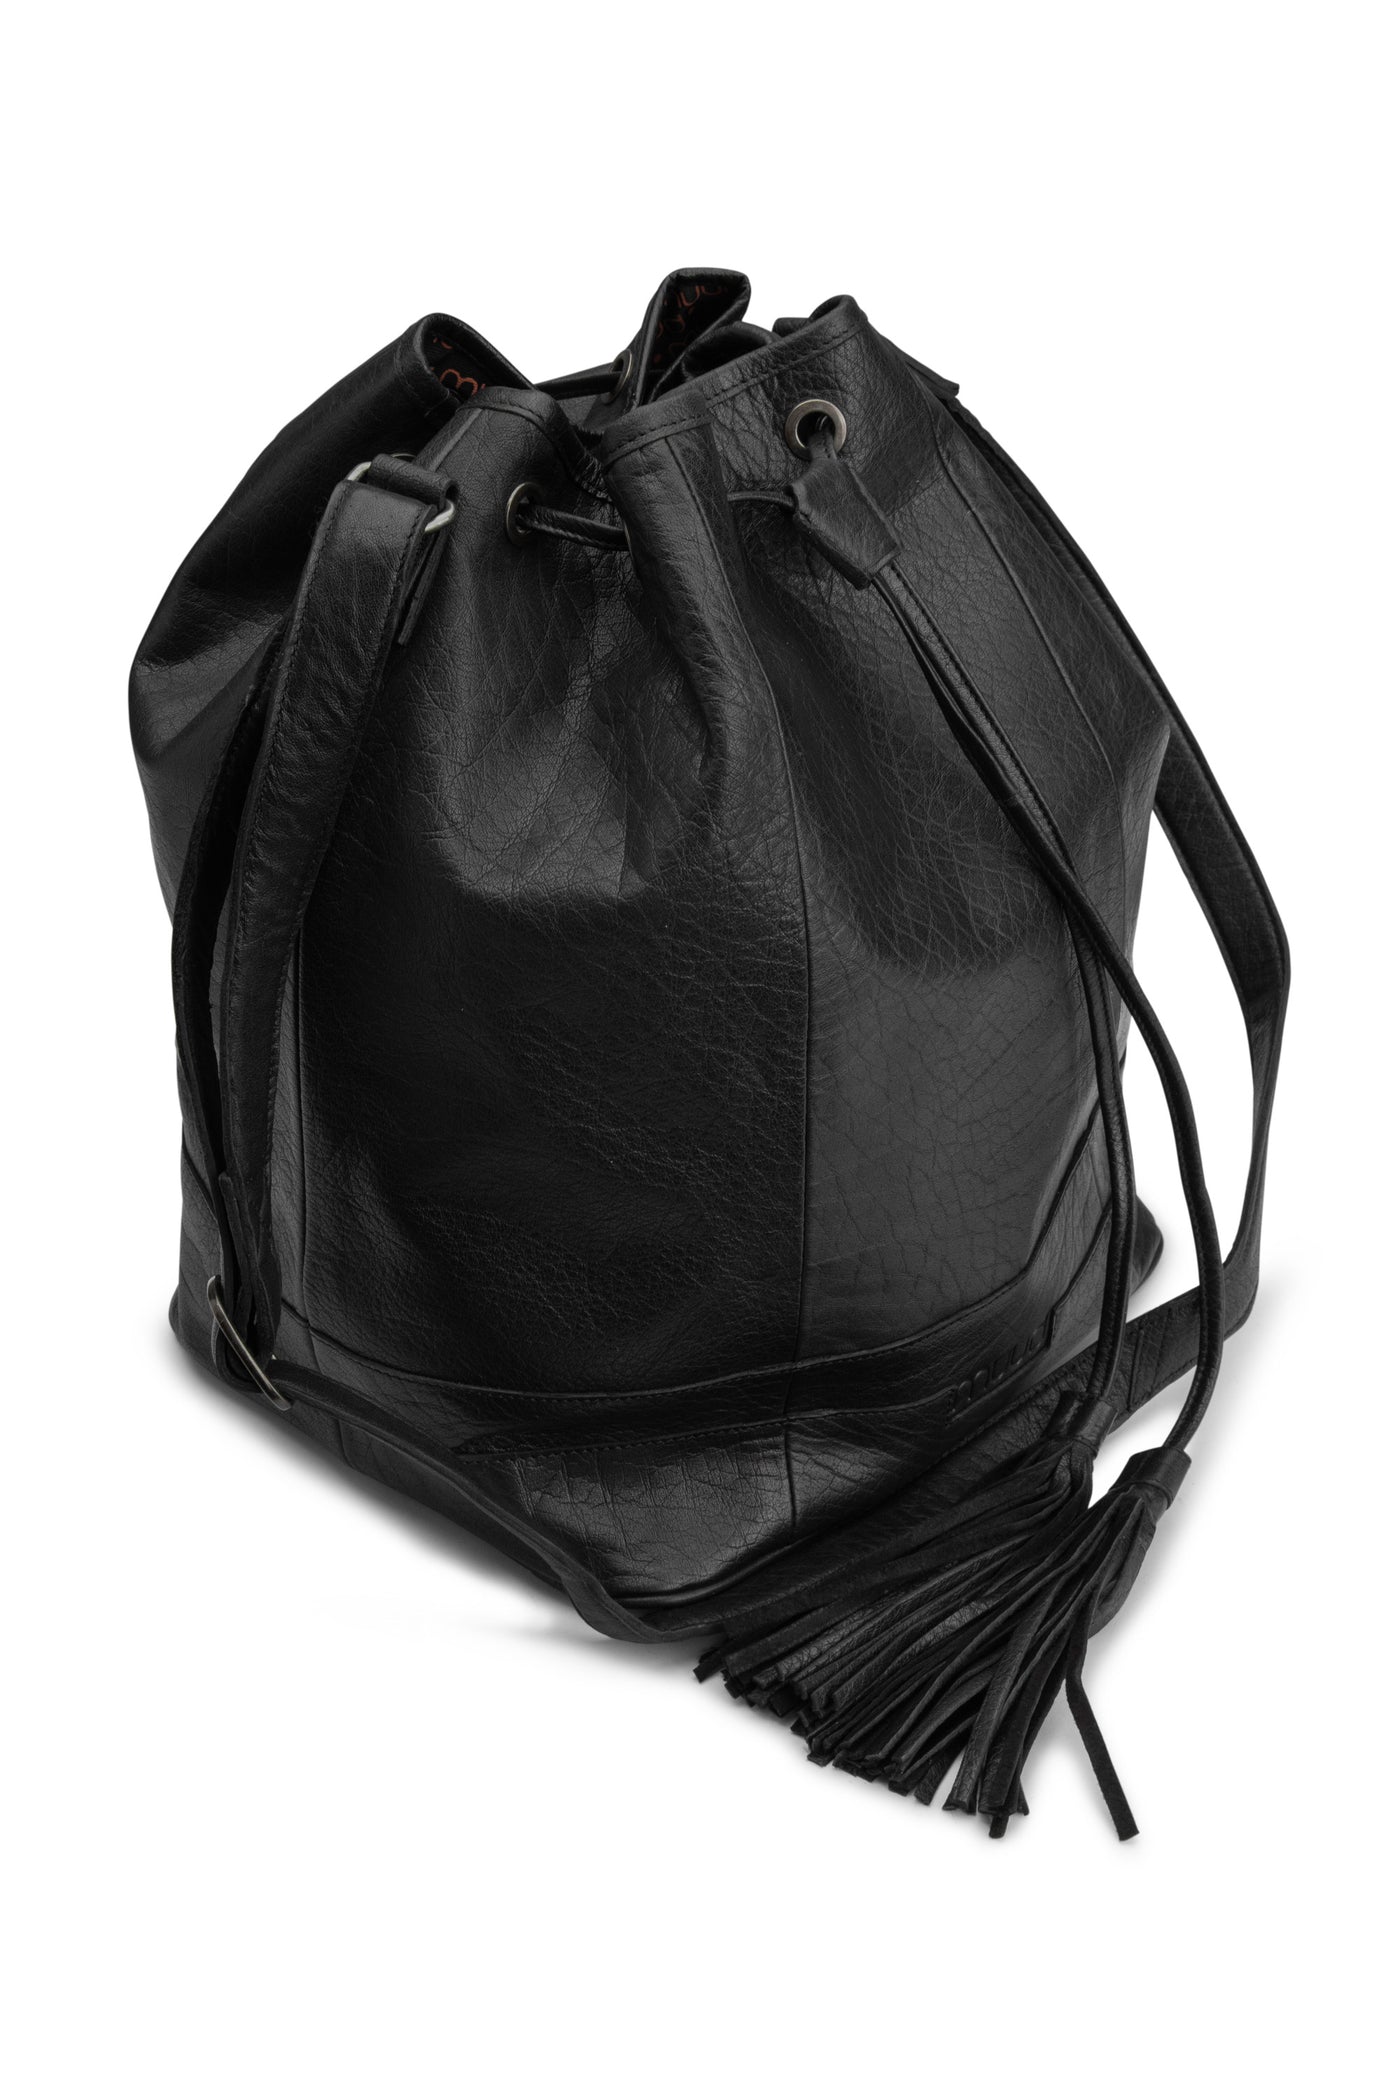 muud Marina Project Bag Living Black